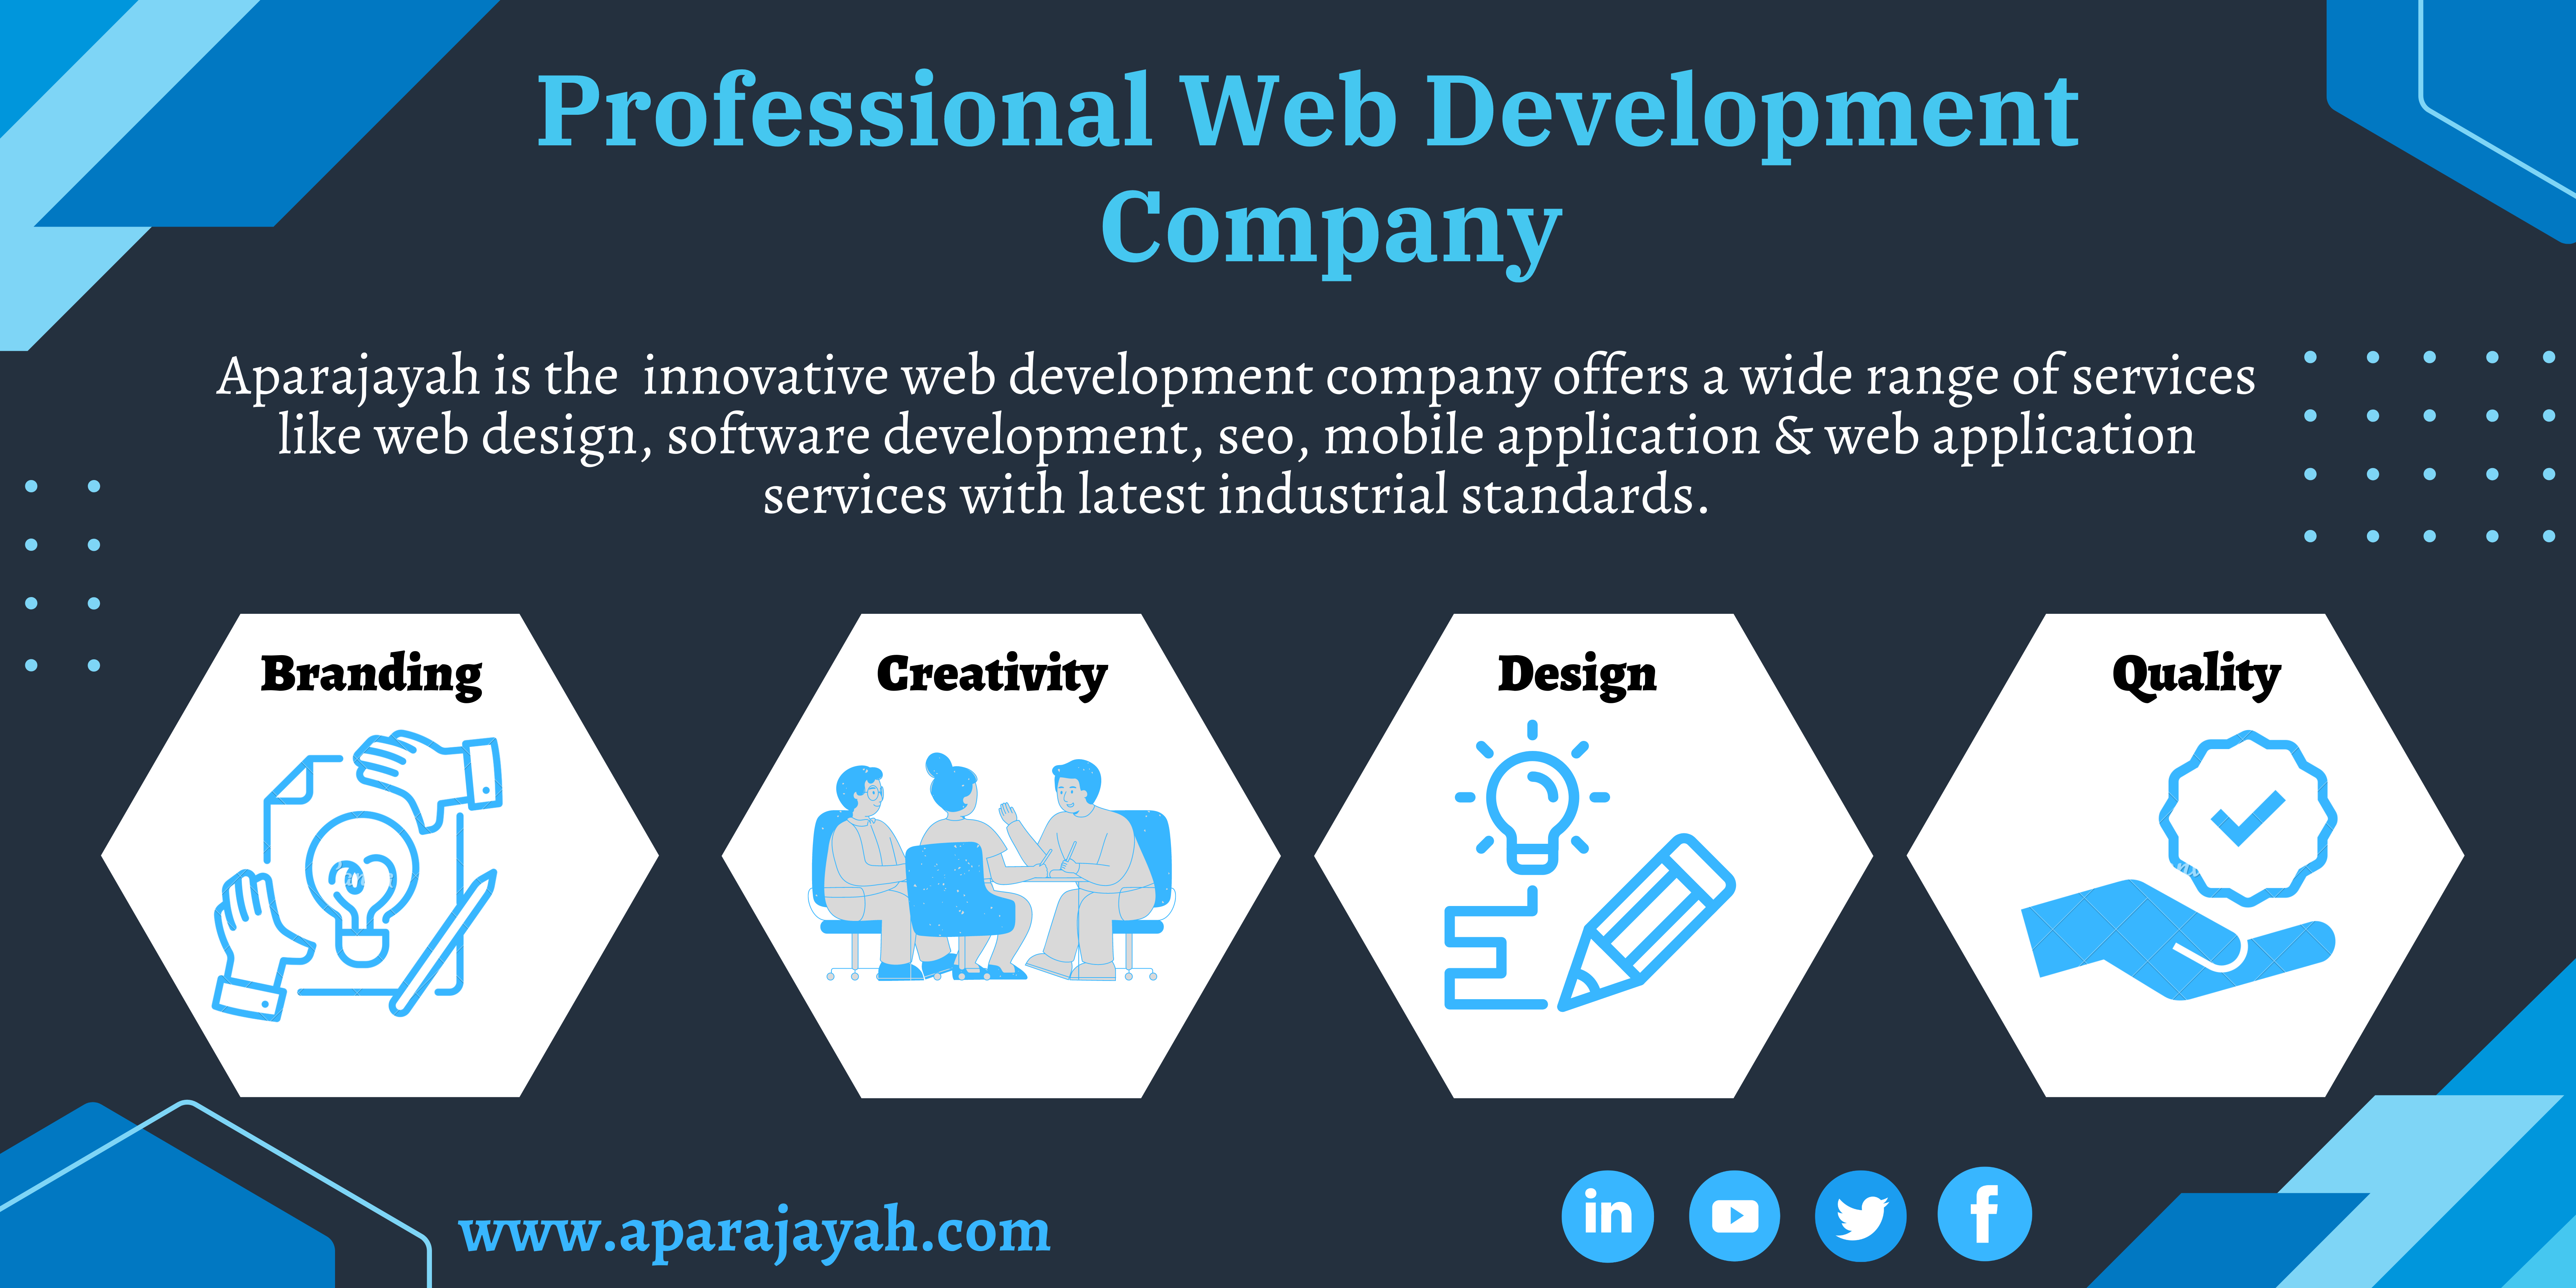 Web Development Company - Aparajayah|Architect|Professional Services